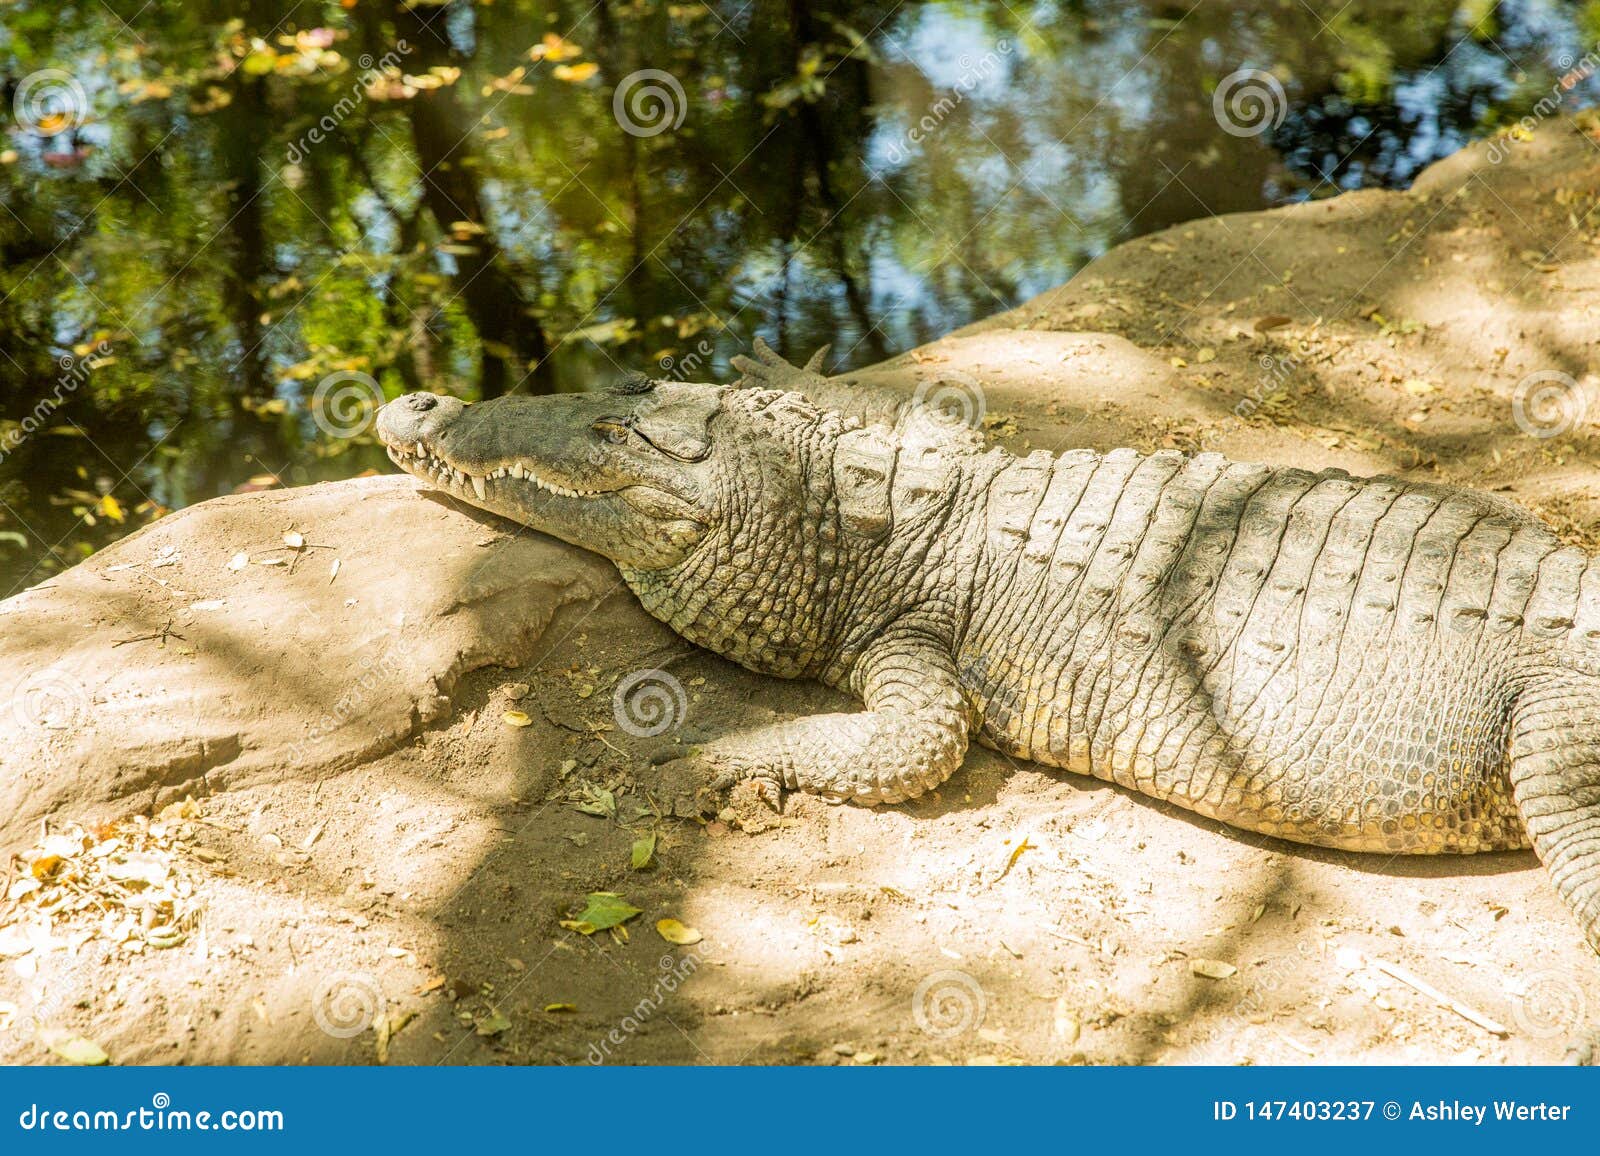 crocodile at zoologico guadalajara